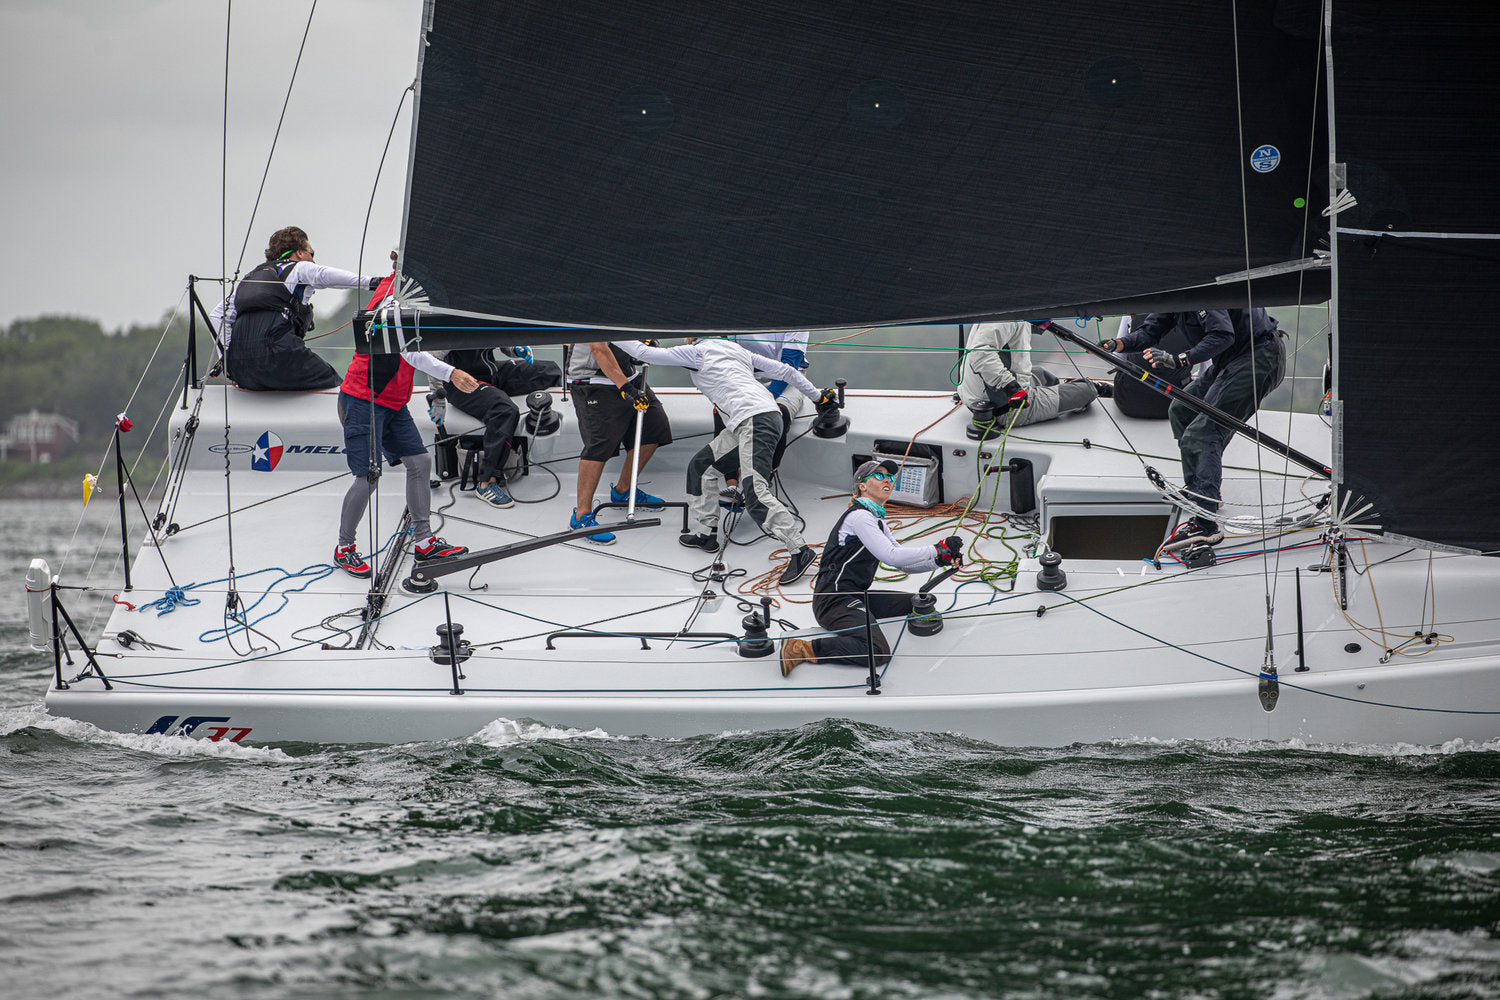 Photos by Melges Performance Sailboats / Sarah Wilkinson for Beigel Sailing Media